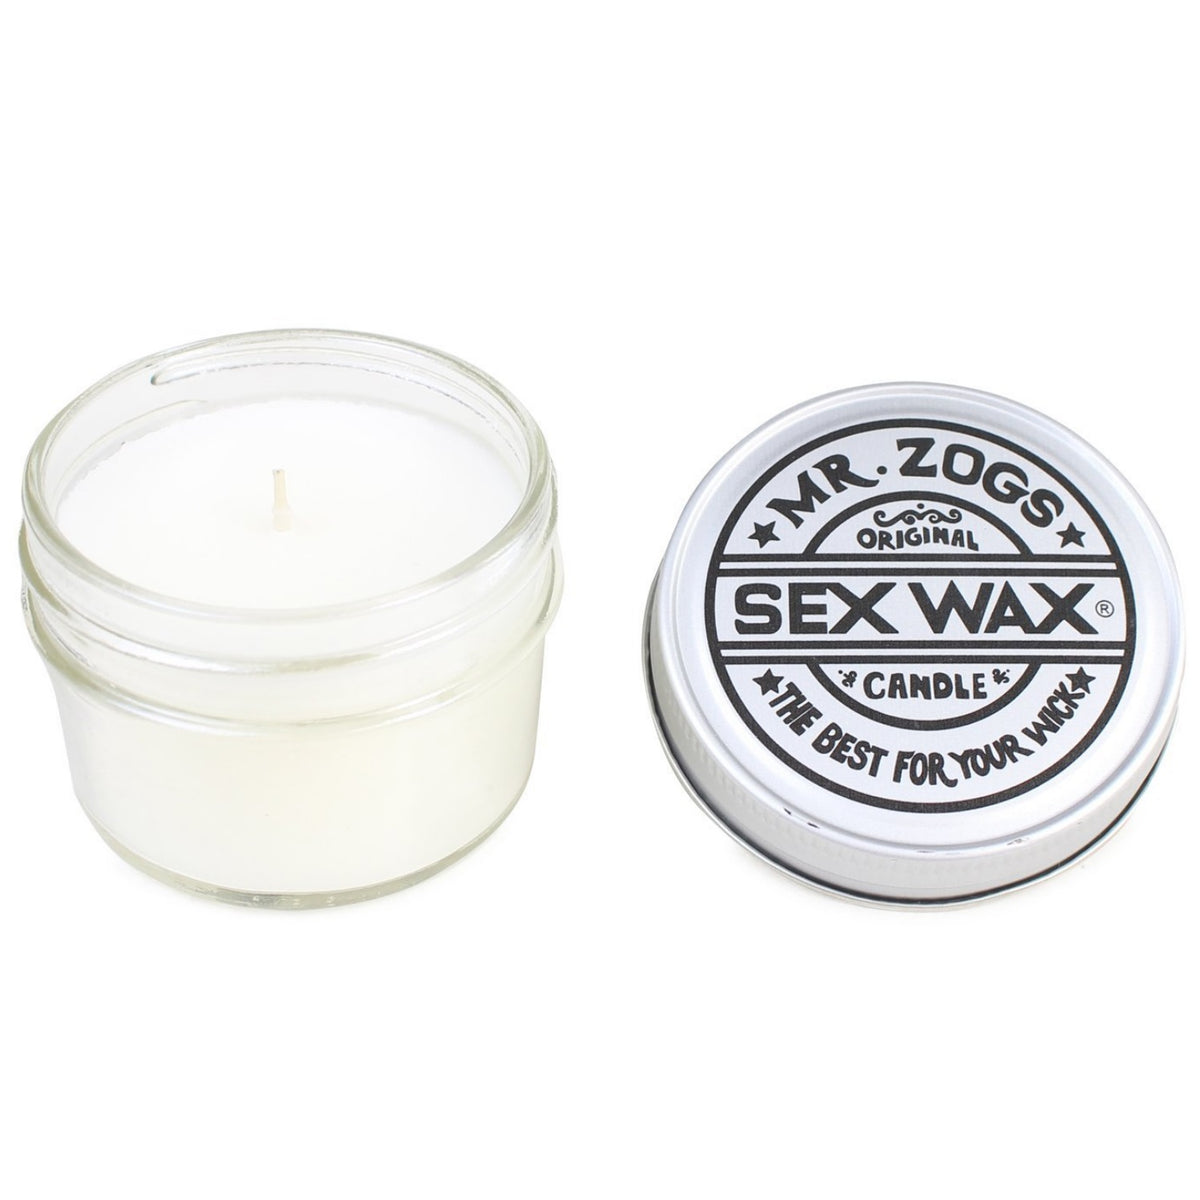 Sex Wax Air Freshener – Northern Light Surf Shop